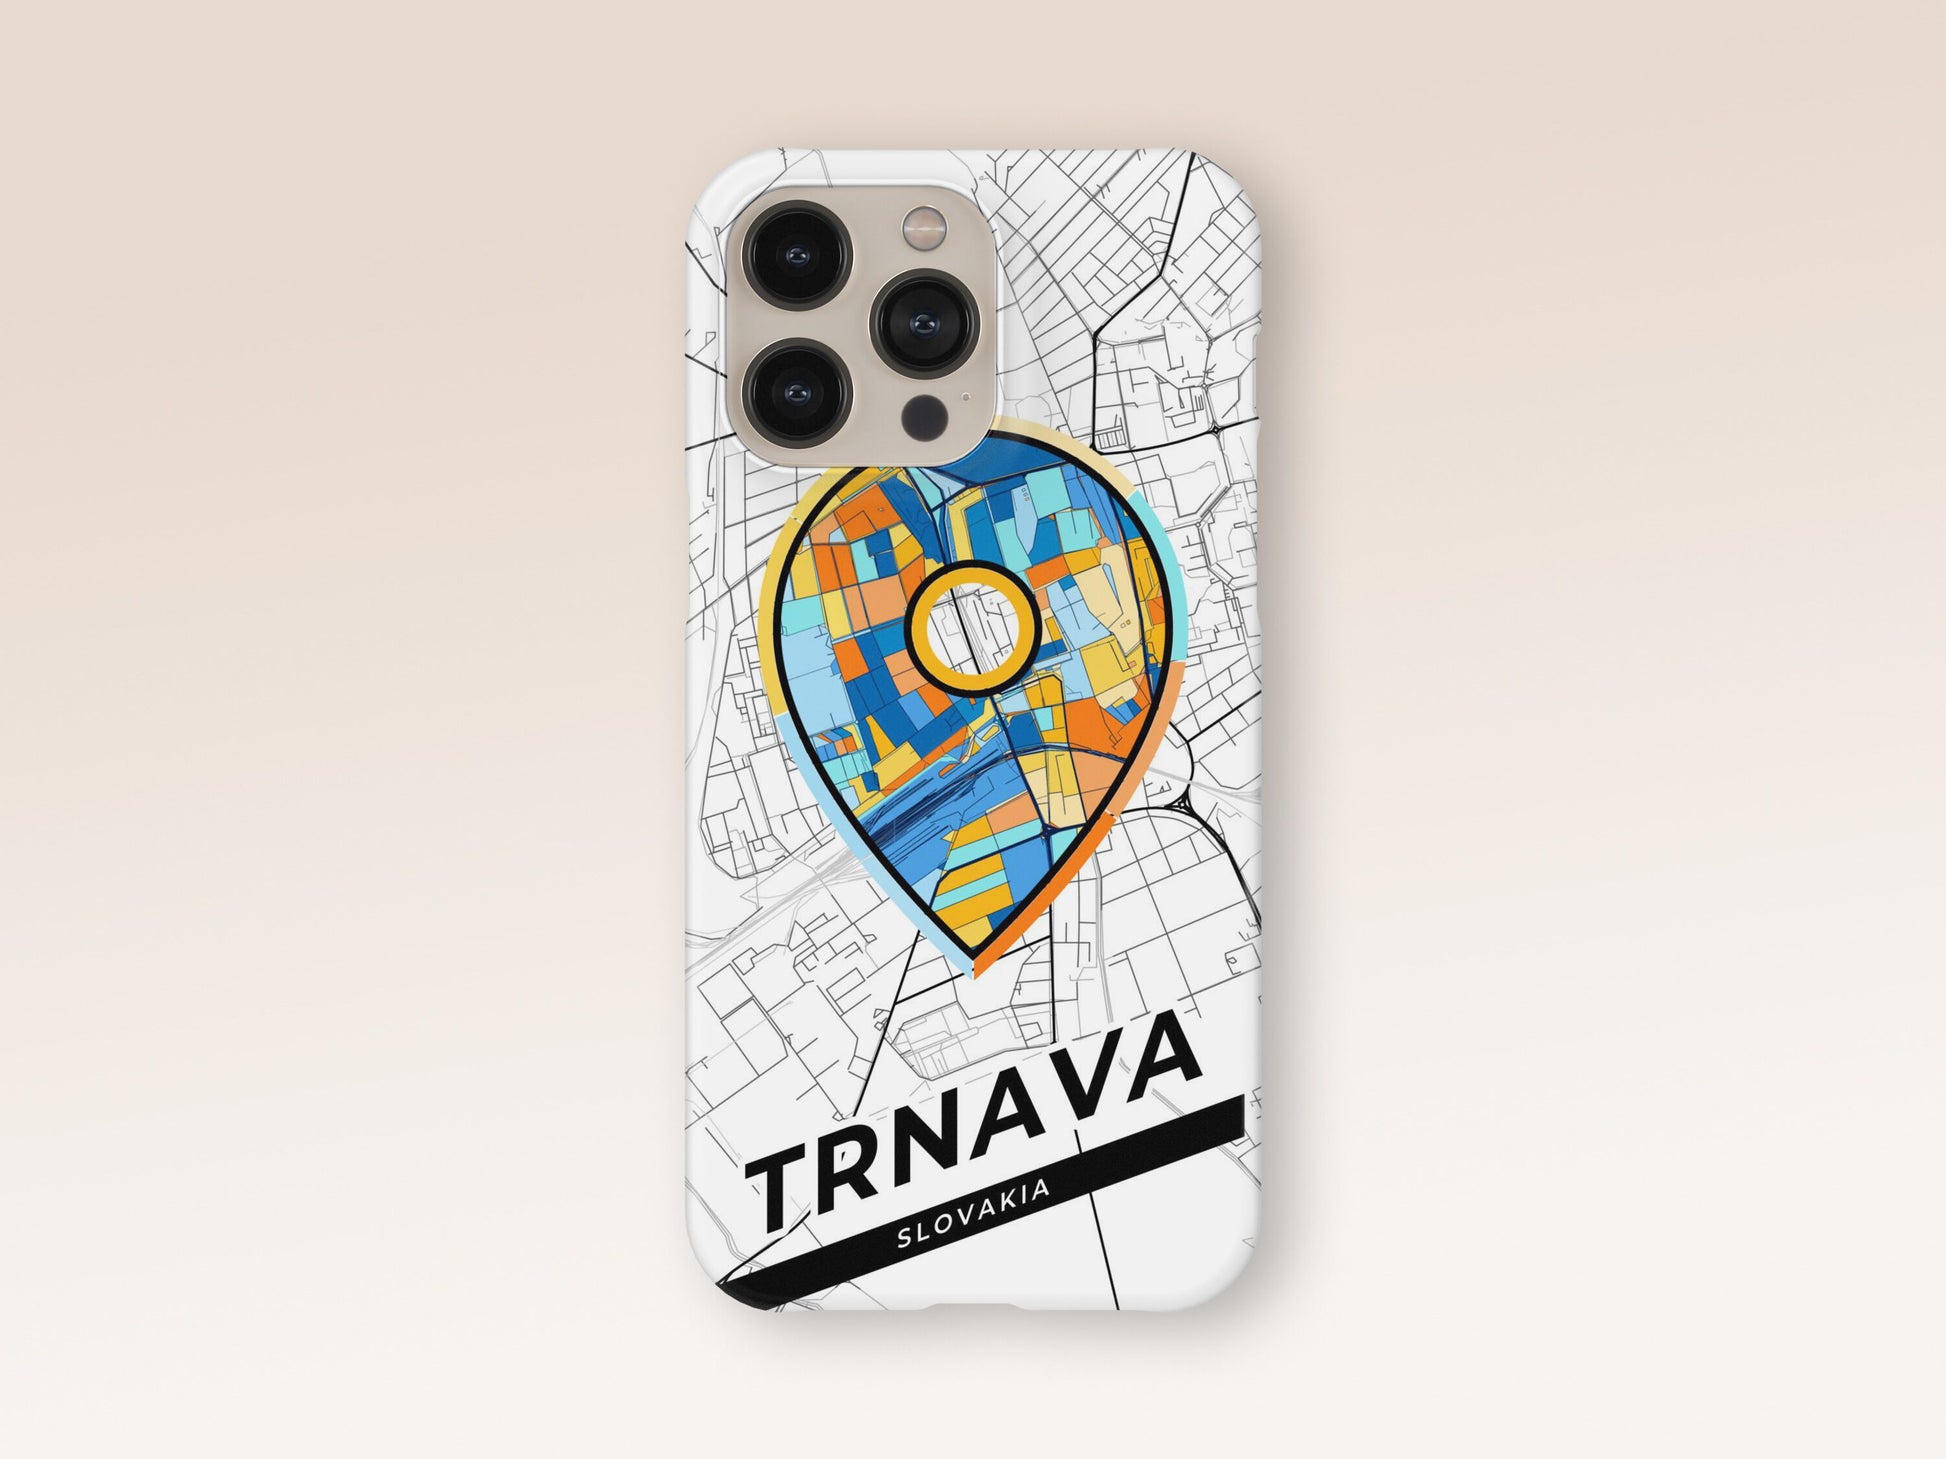 Trnava Slovakia slim phone case with colorful icon 1